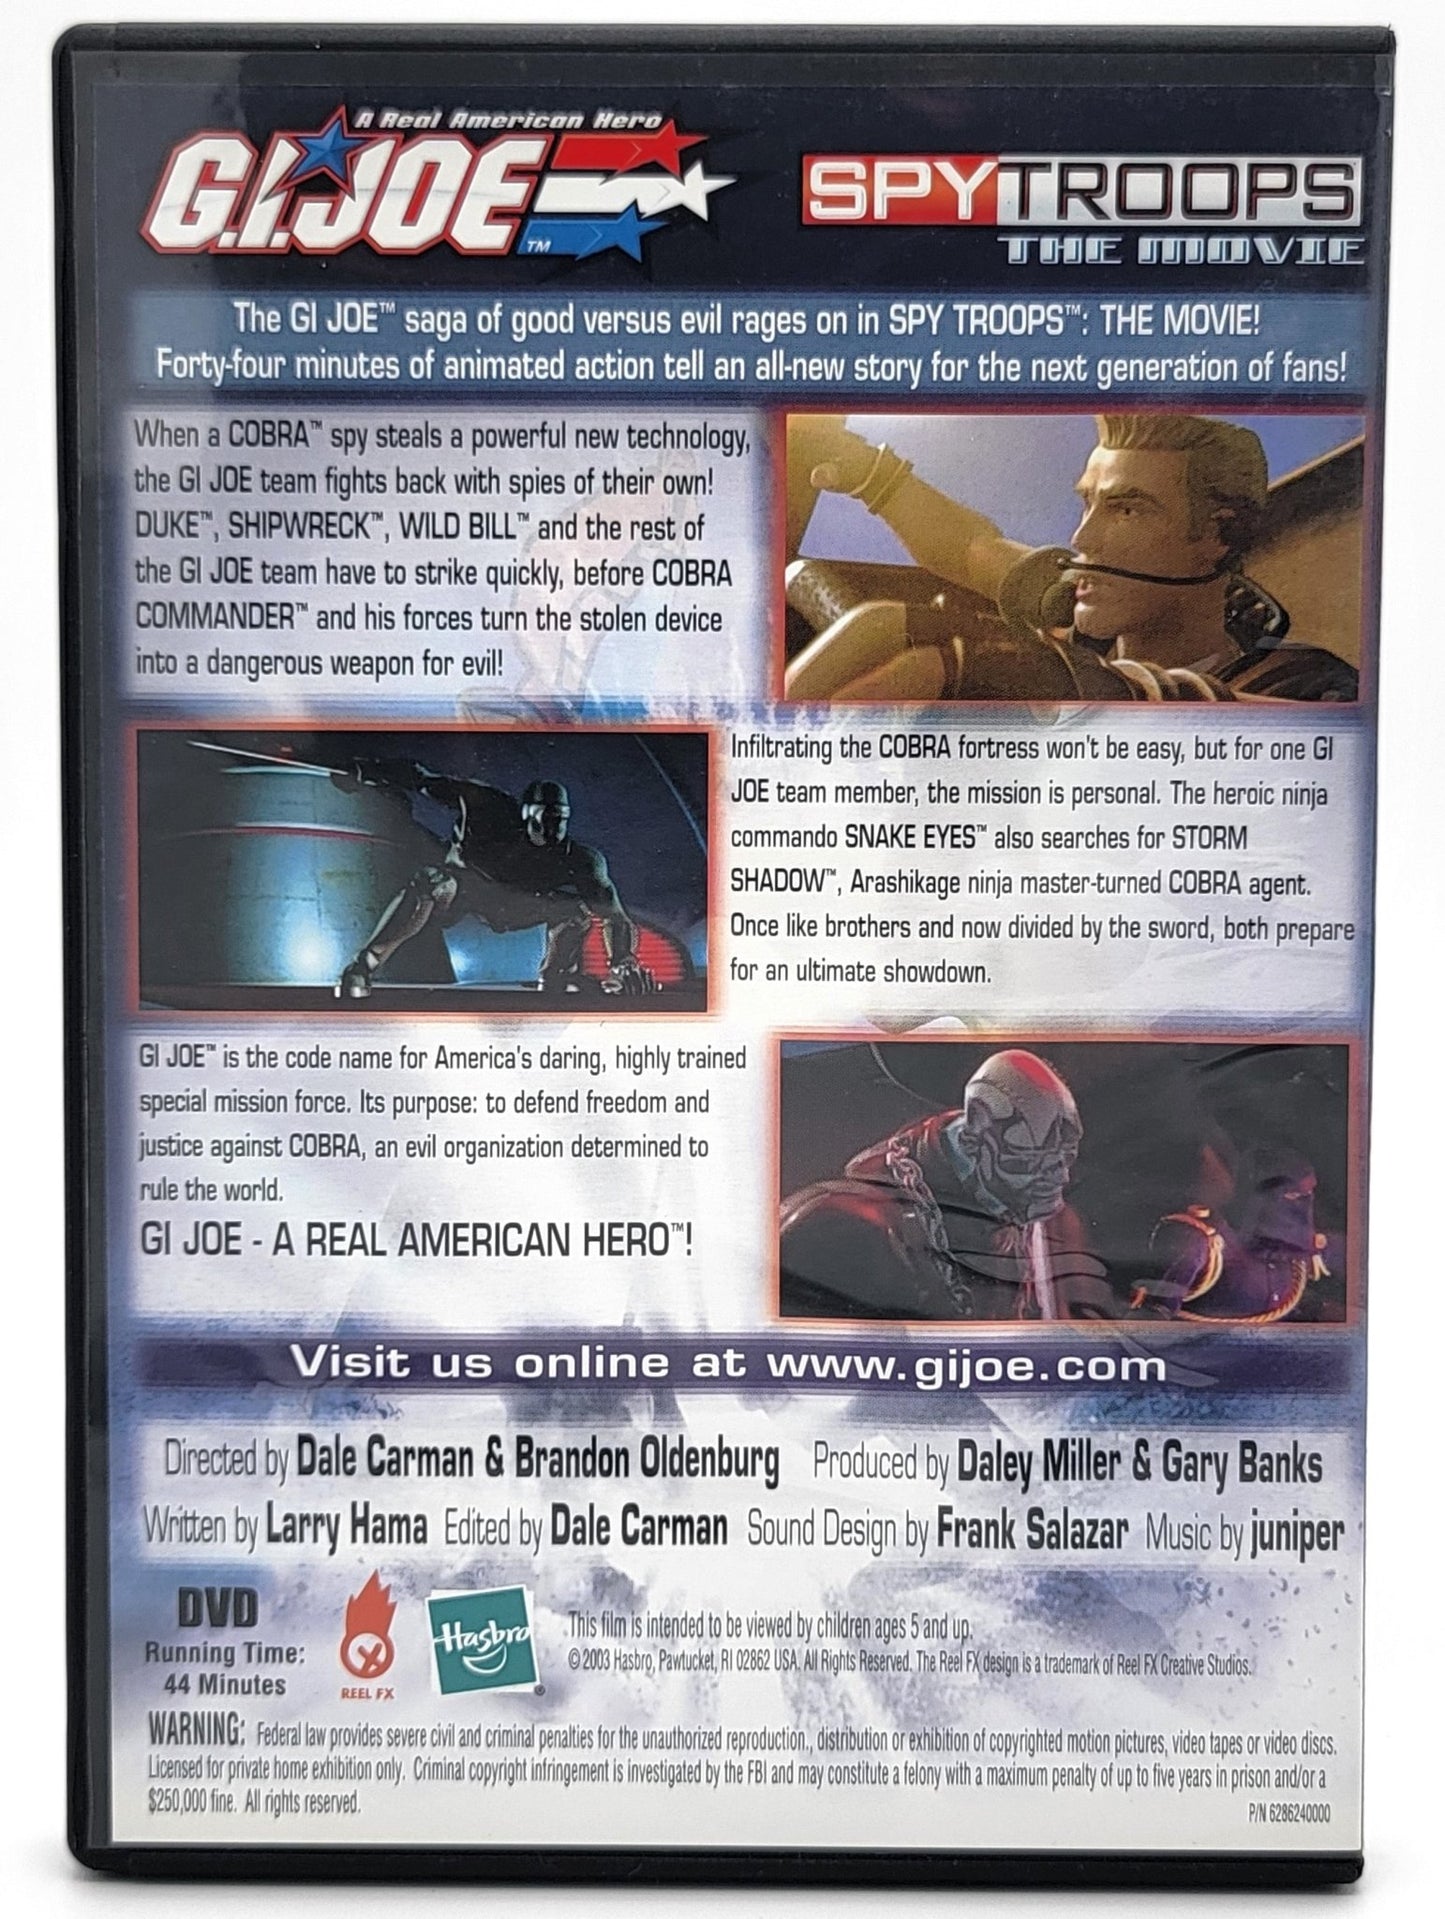 Hasbro - G.I Joe - A real American Hero - Spy Troops The Movie | DVD | - DVD - Steady Bunny Shop